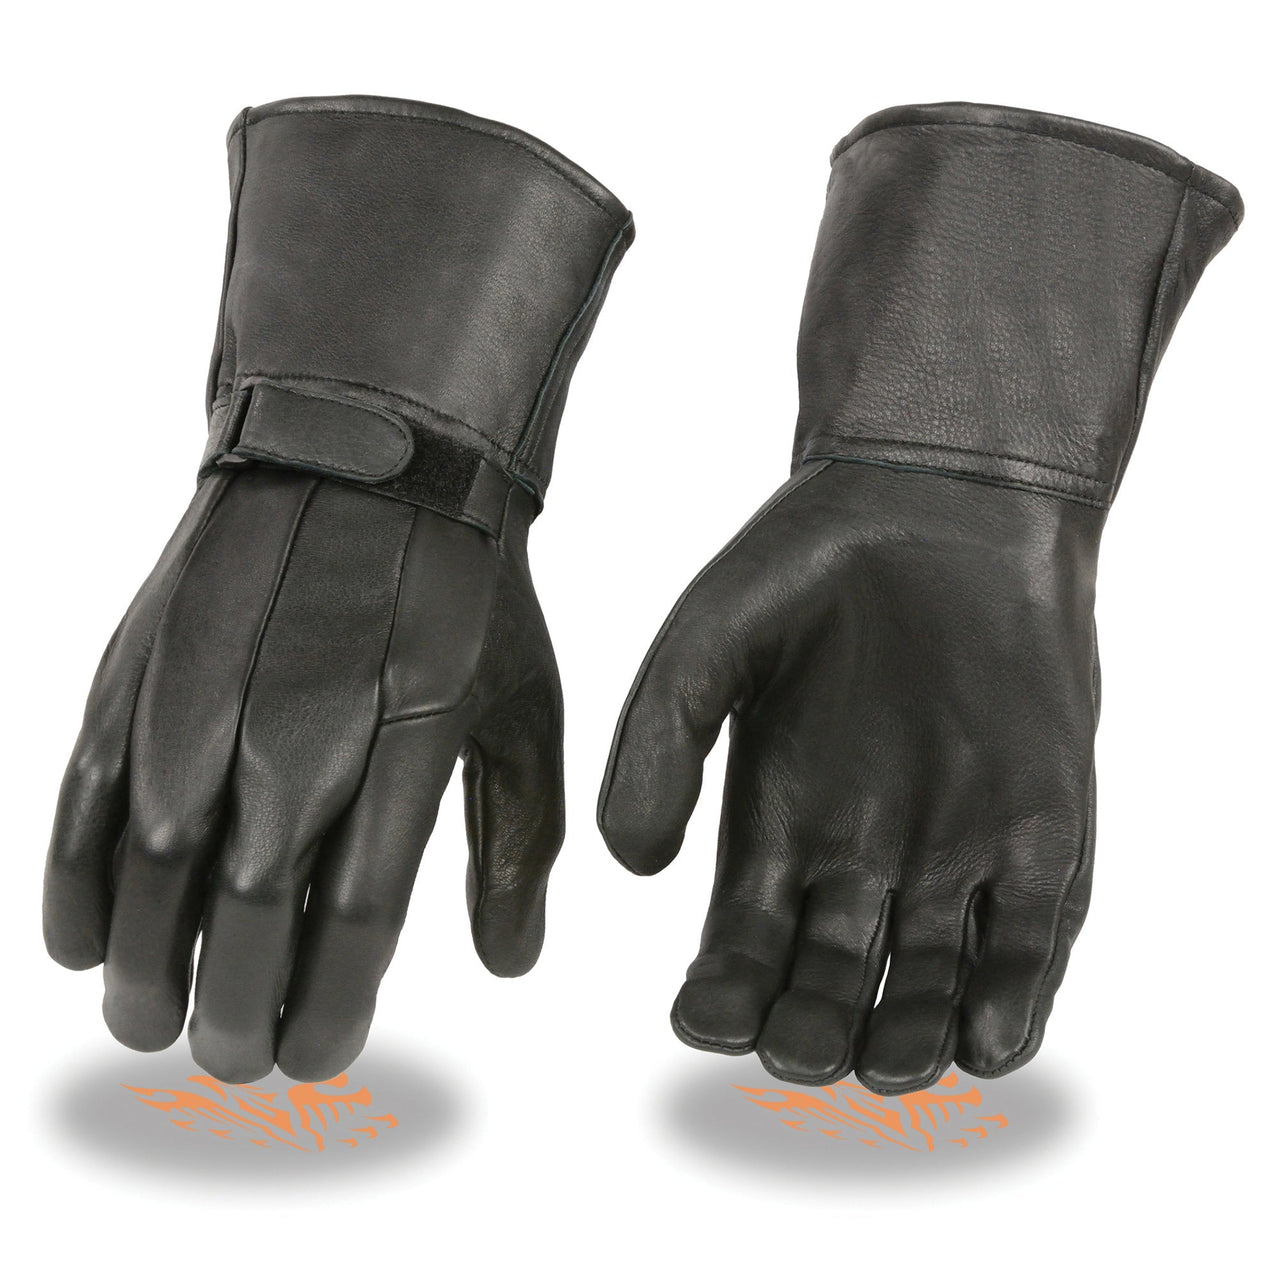 Men's Light Lined Gauntlet Gloves w/ Wrist Strap - HighwayLeather